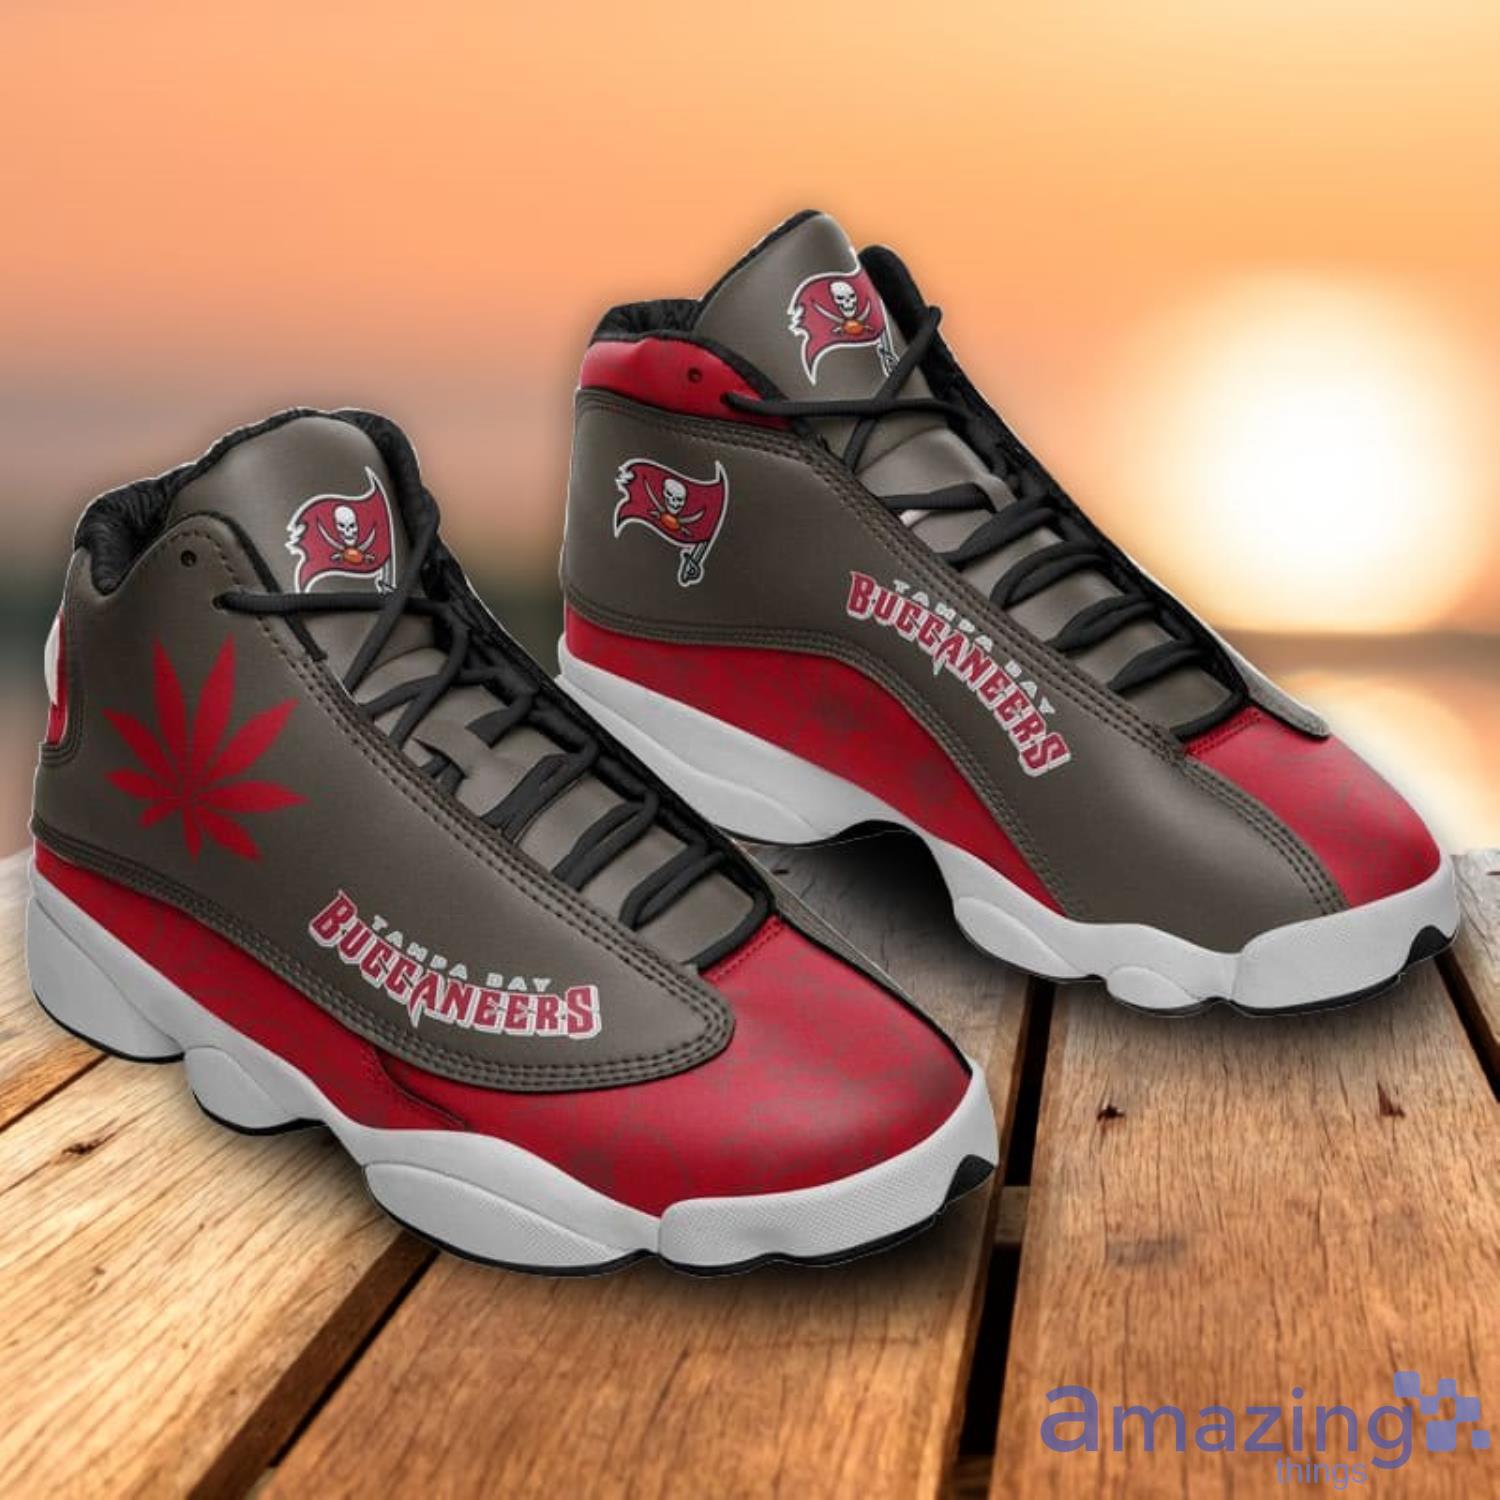 Tampa Bay Buccaneers Weed Air Jordan 13 Shoes For Fans